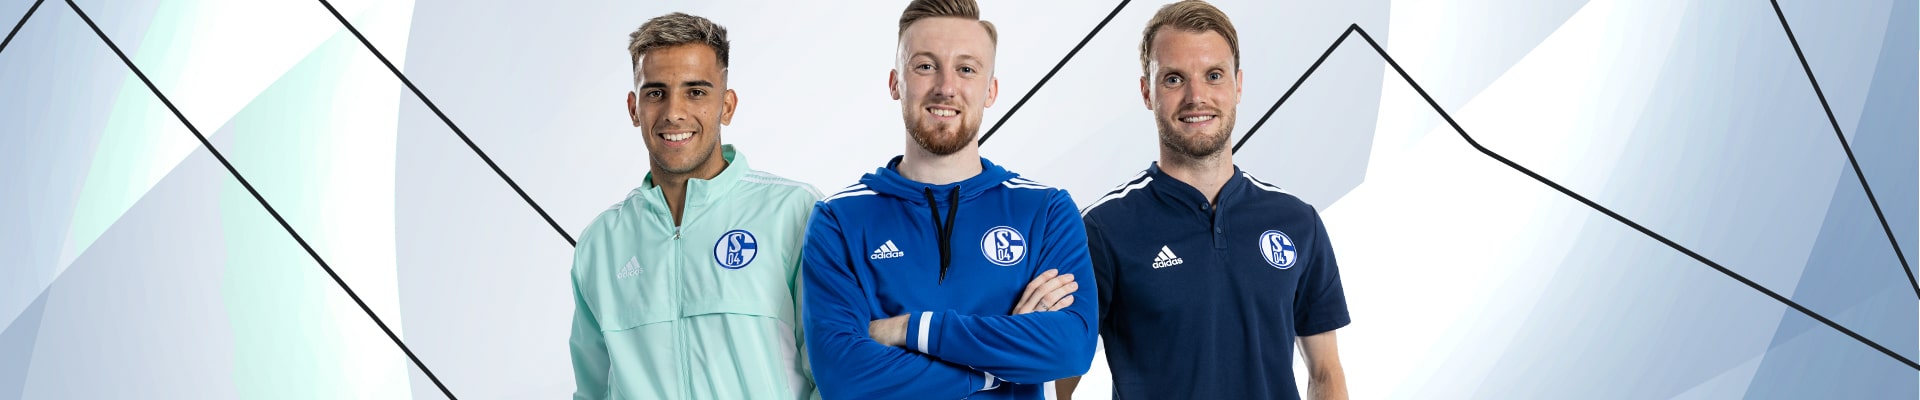 Schalke adidas teamwear